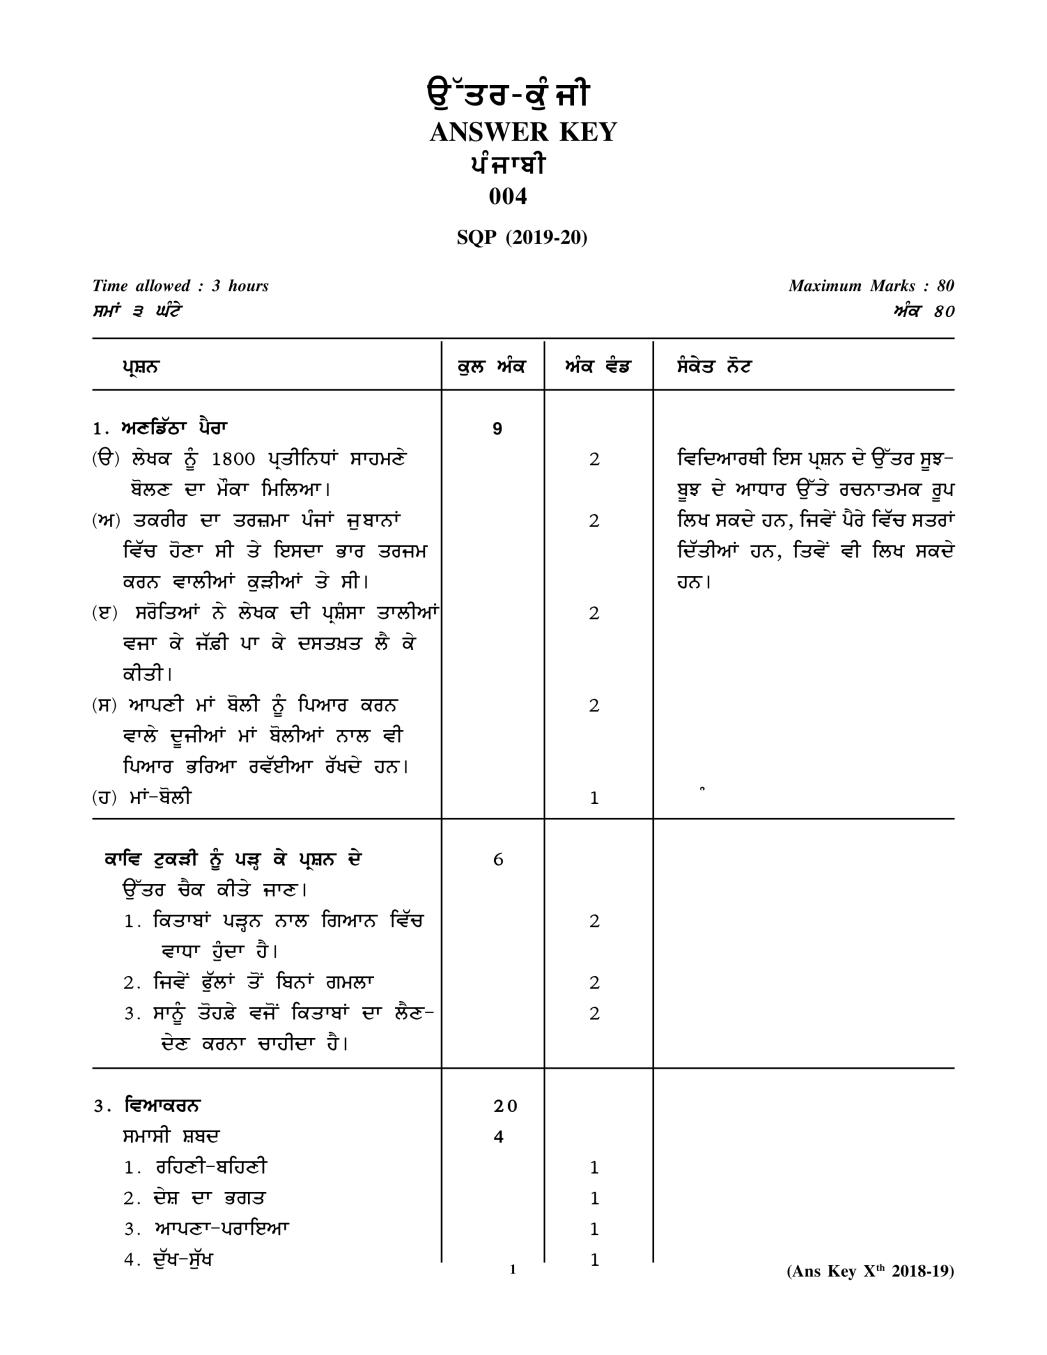 CBSE Class 10 Marking Scheme 2020 for Punjabi - Page 1